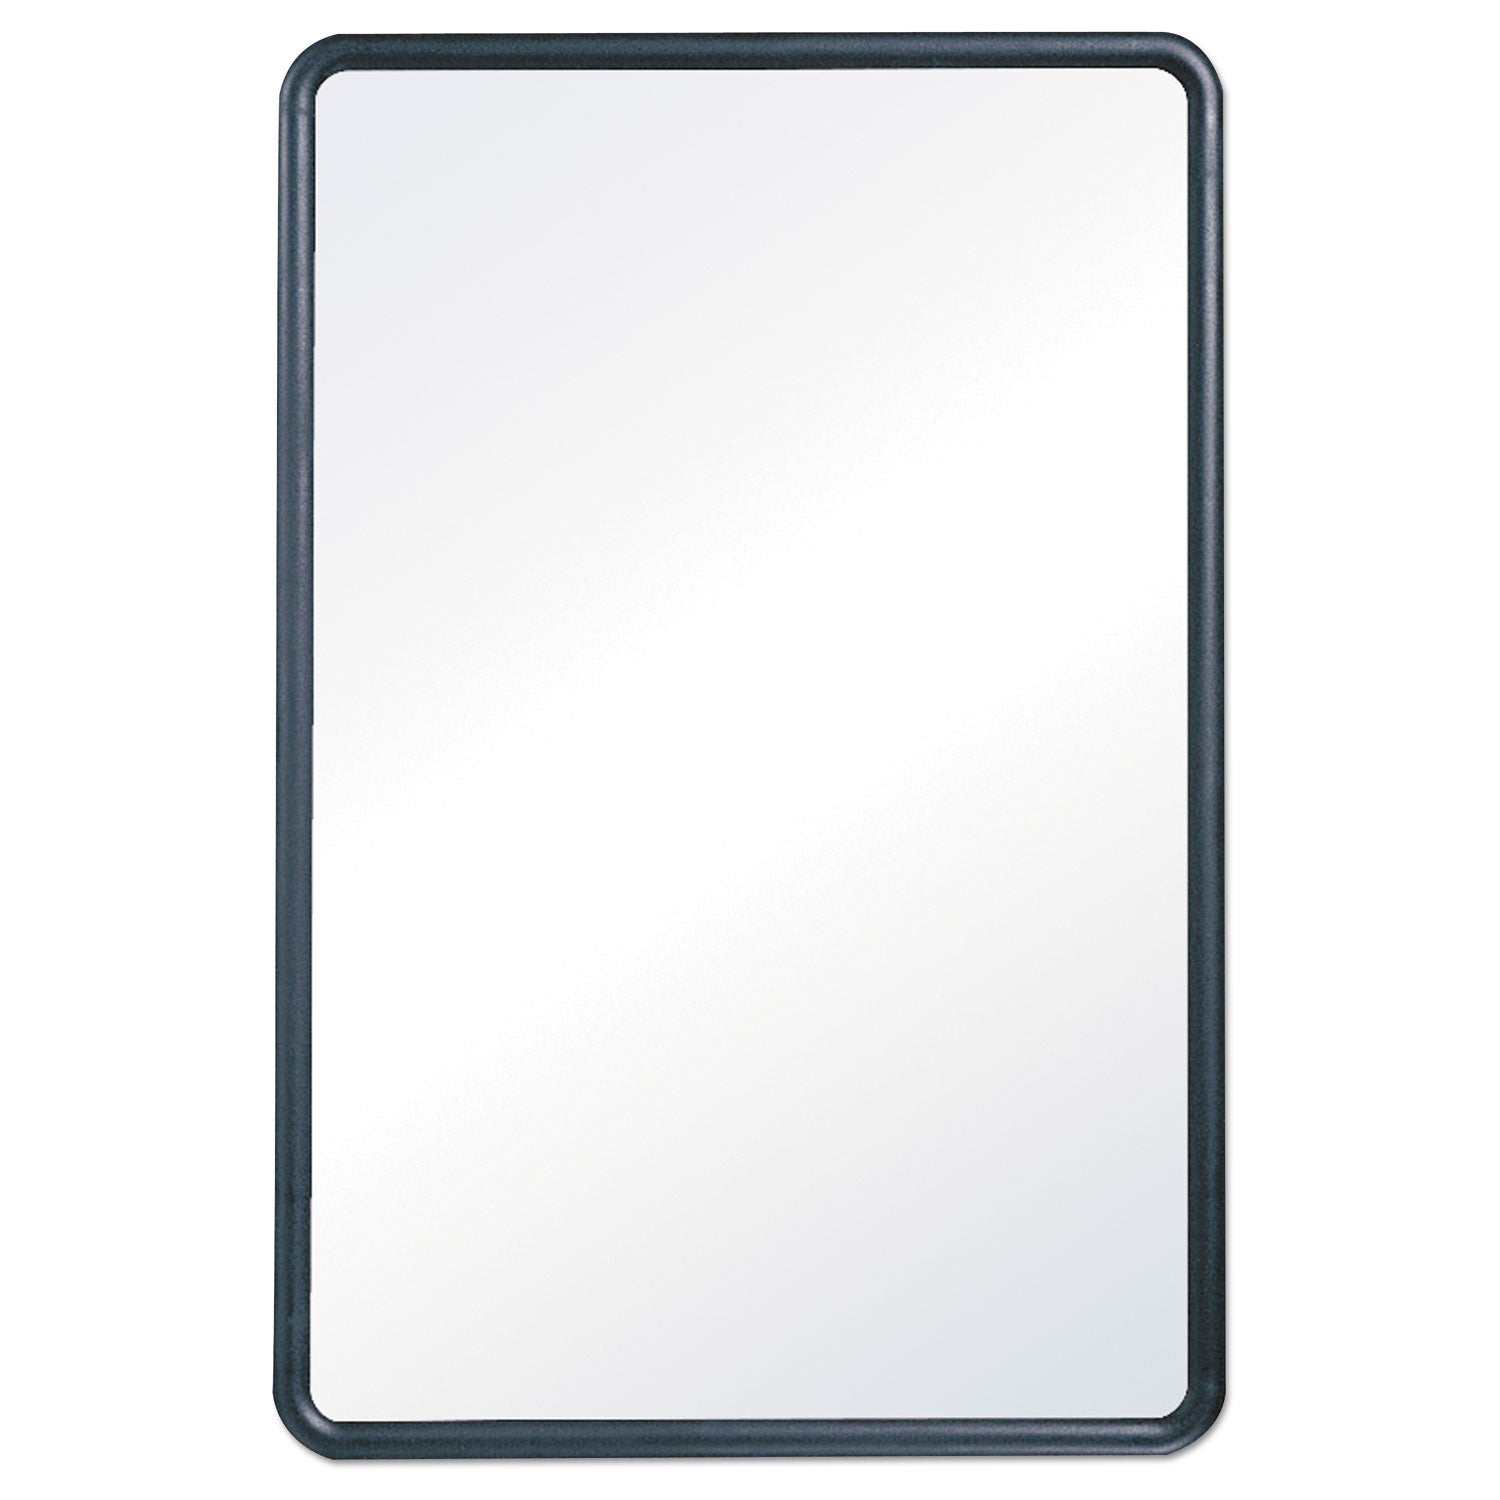 Contour Dry Erase Board, 48 x 36, Melamine White Surface, Black Plastic Frame - 